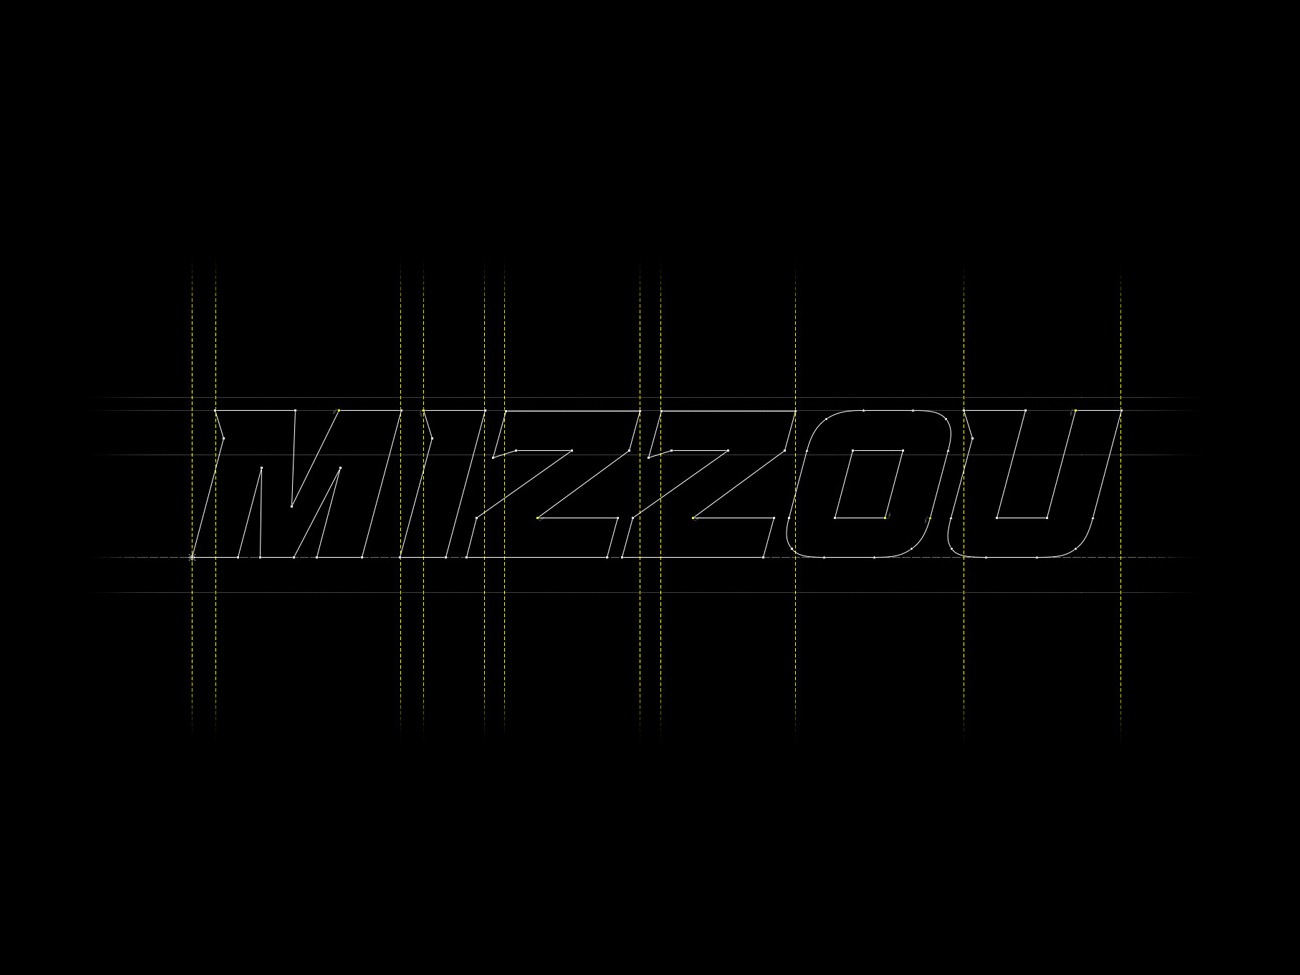 University of Missouri (Mizzou) Branding and Font Design